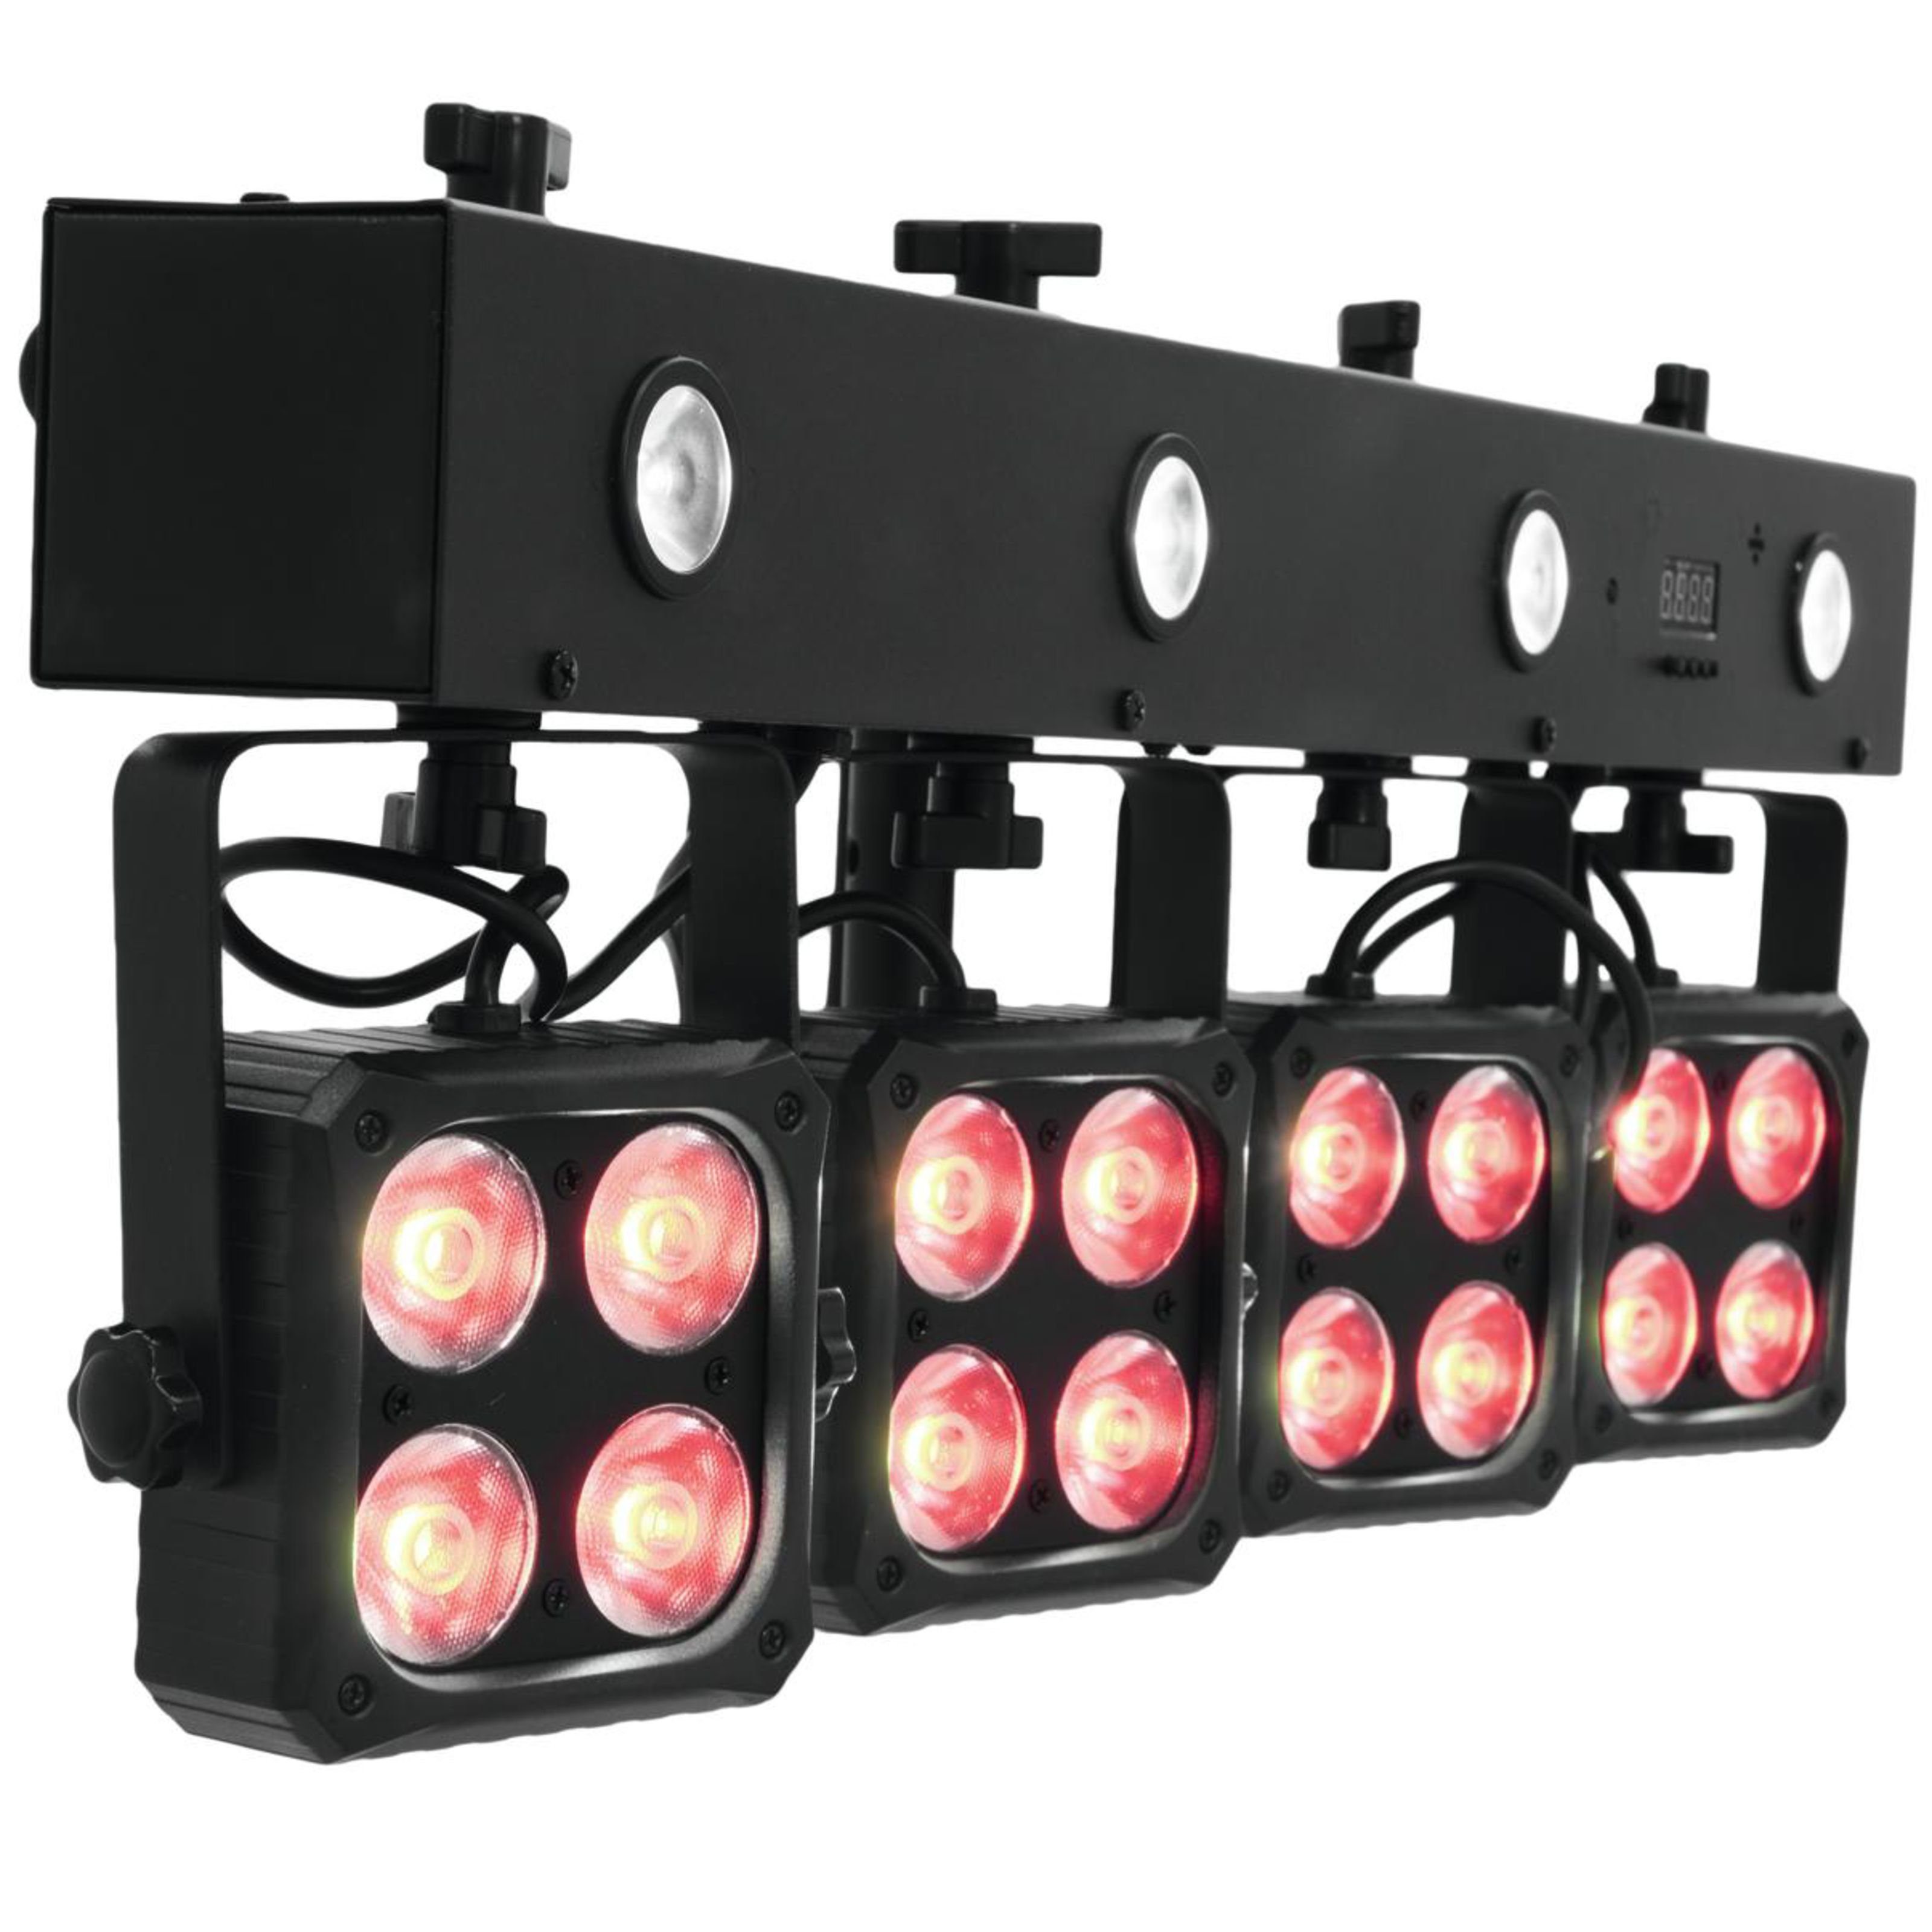 EUROLITE LED Scheinwerfer, LED KLS-180 Kompakt-Lichtset - Scheinwerfer und Effekt Set